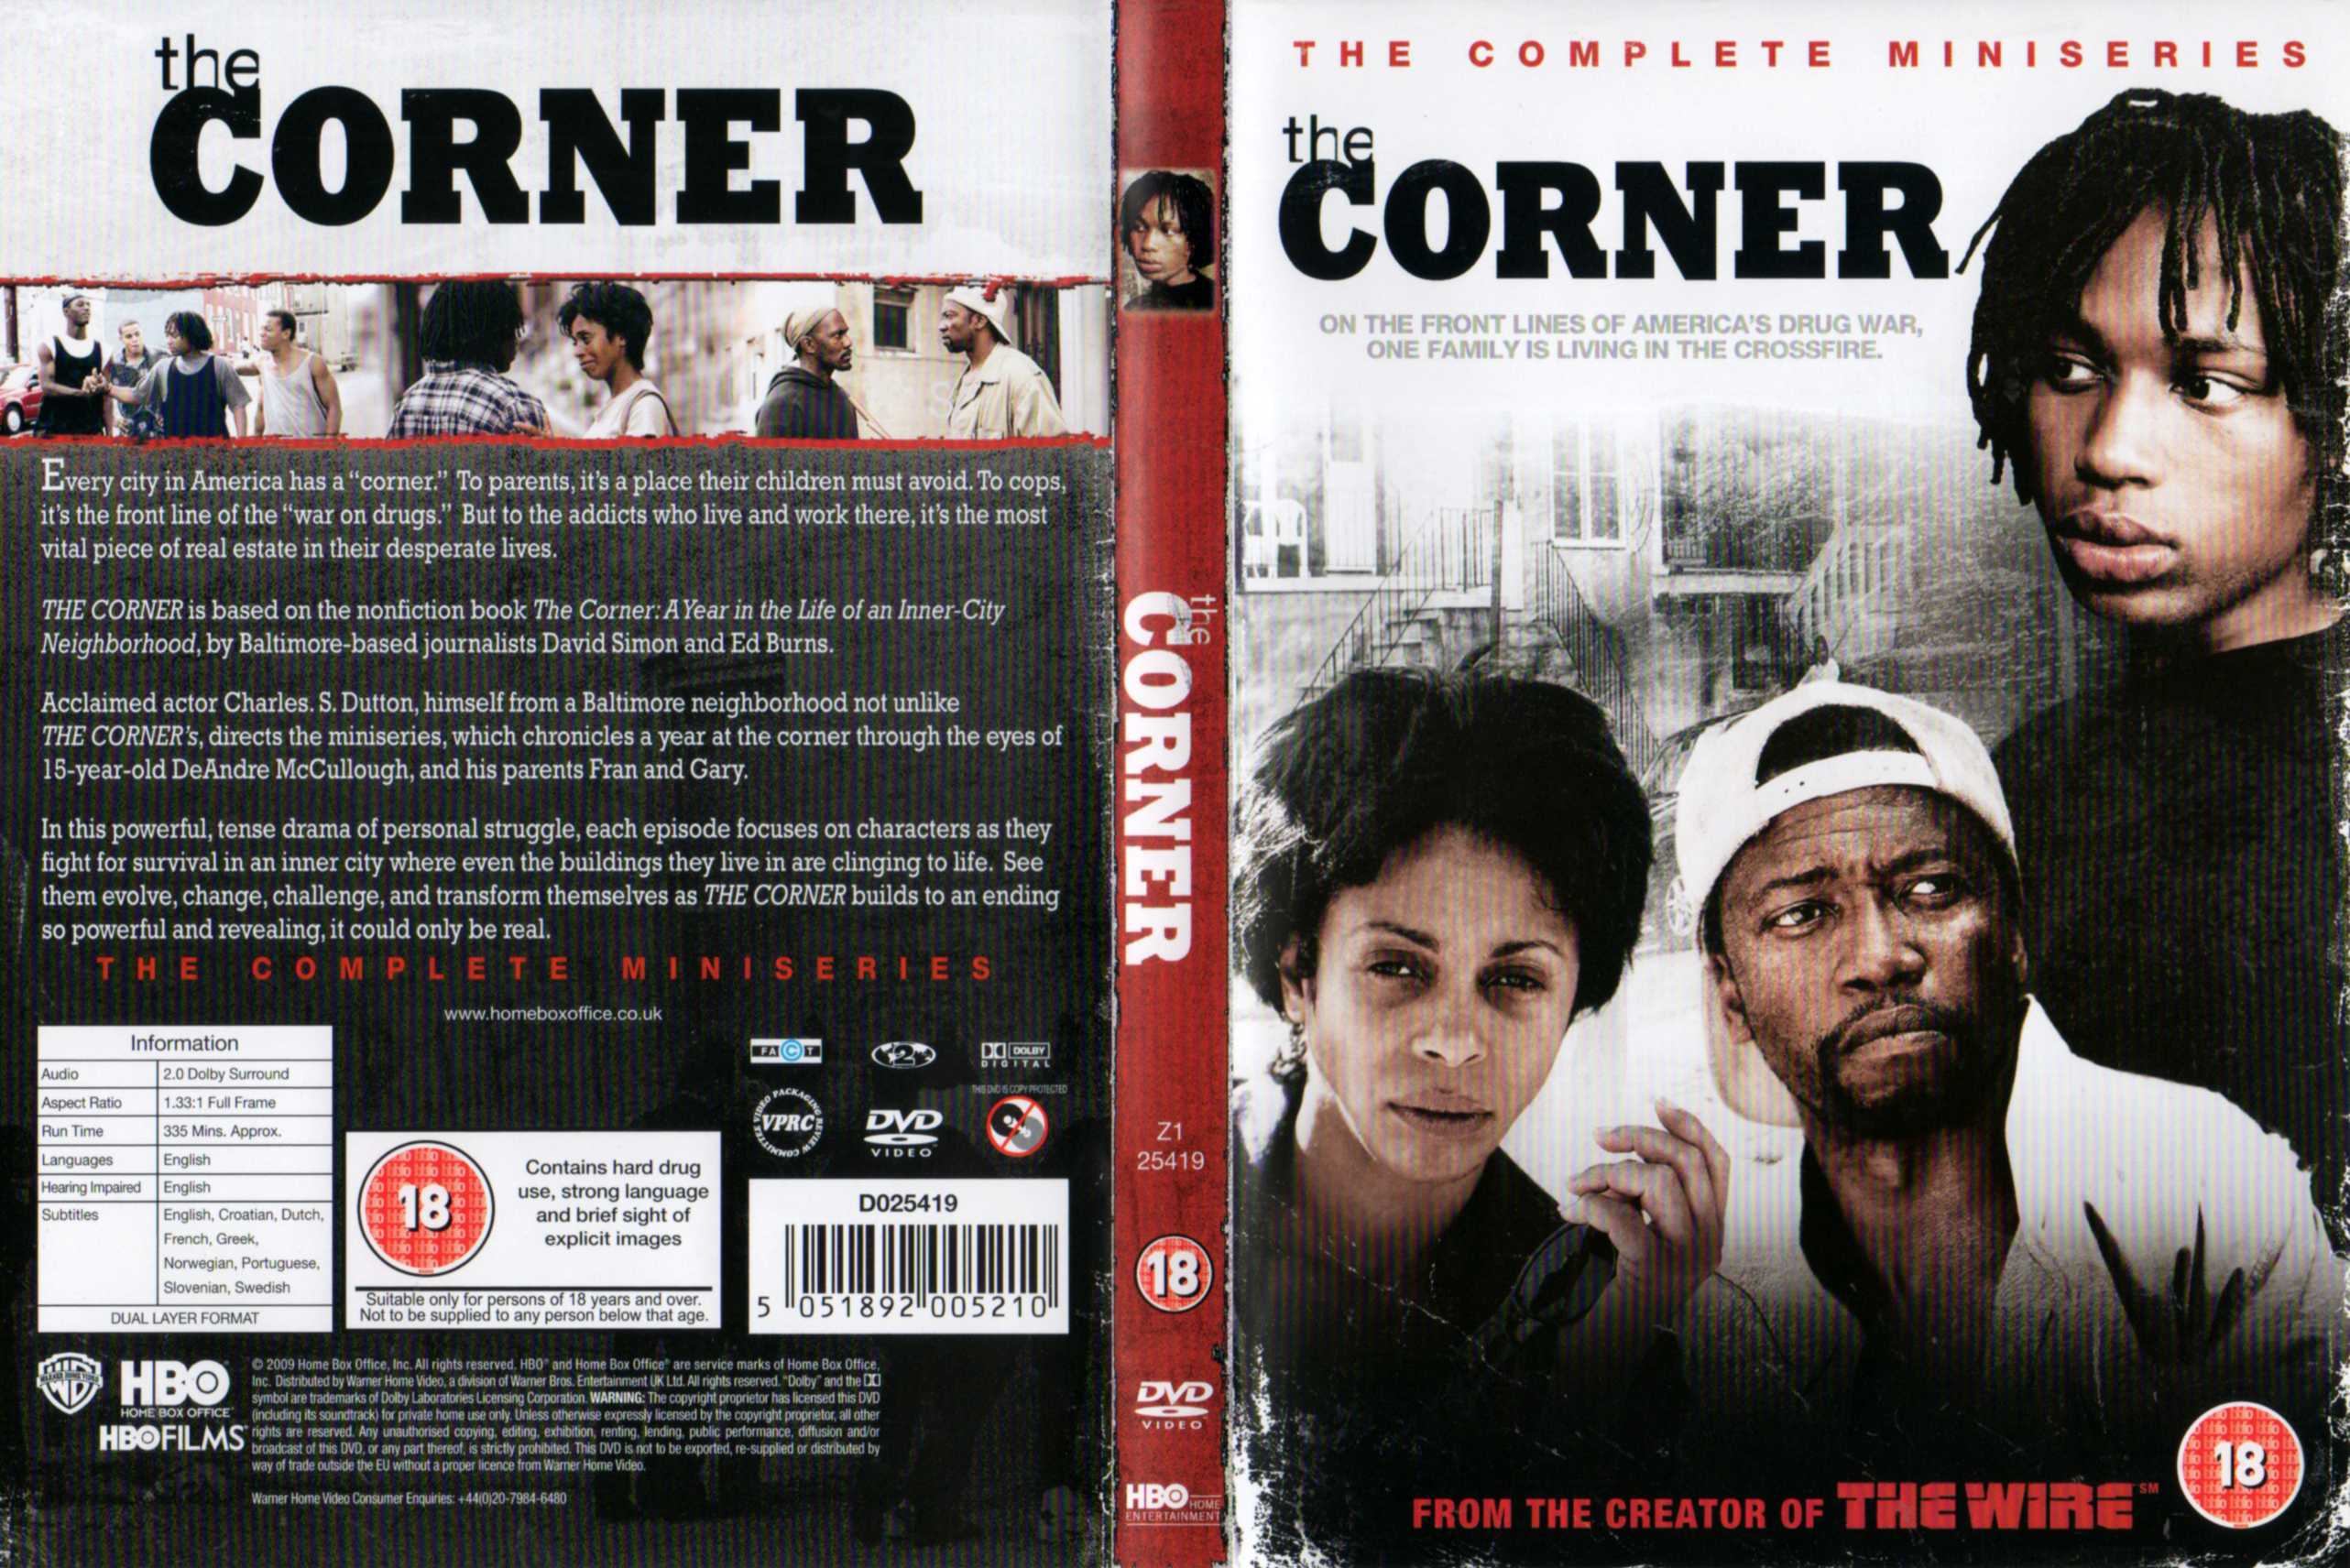 Jaquette DVD The corner